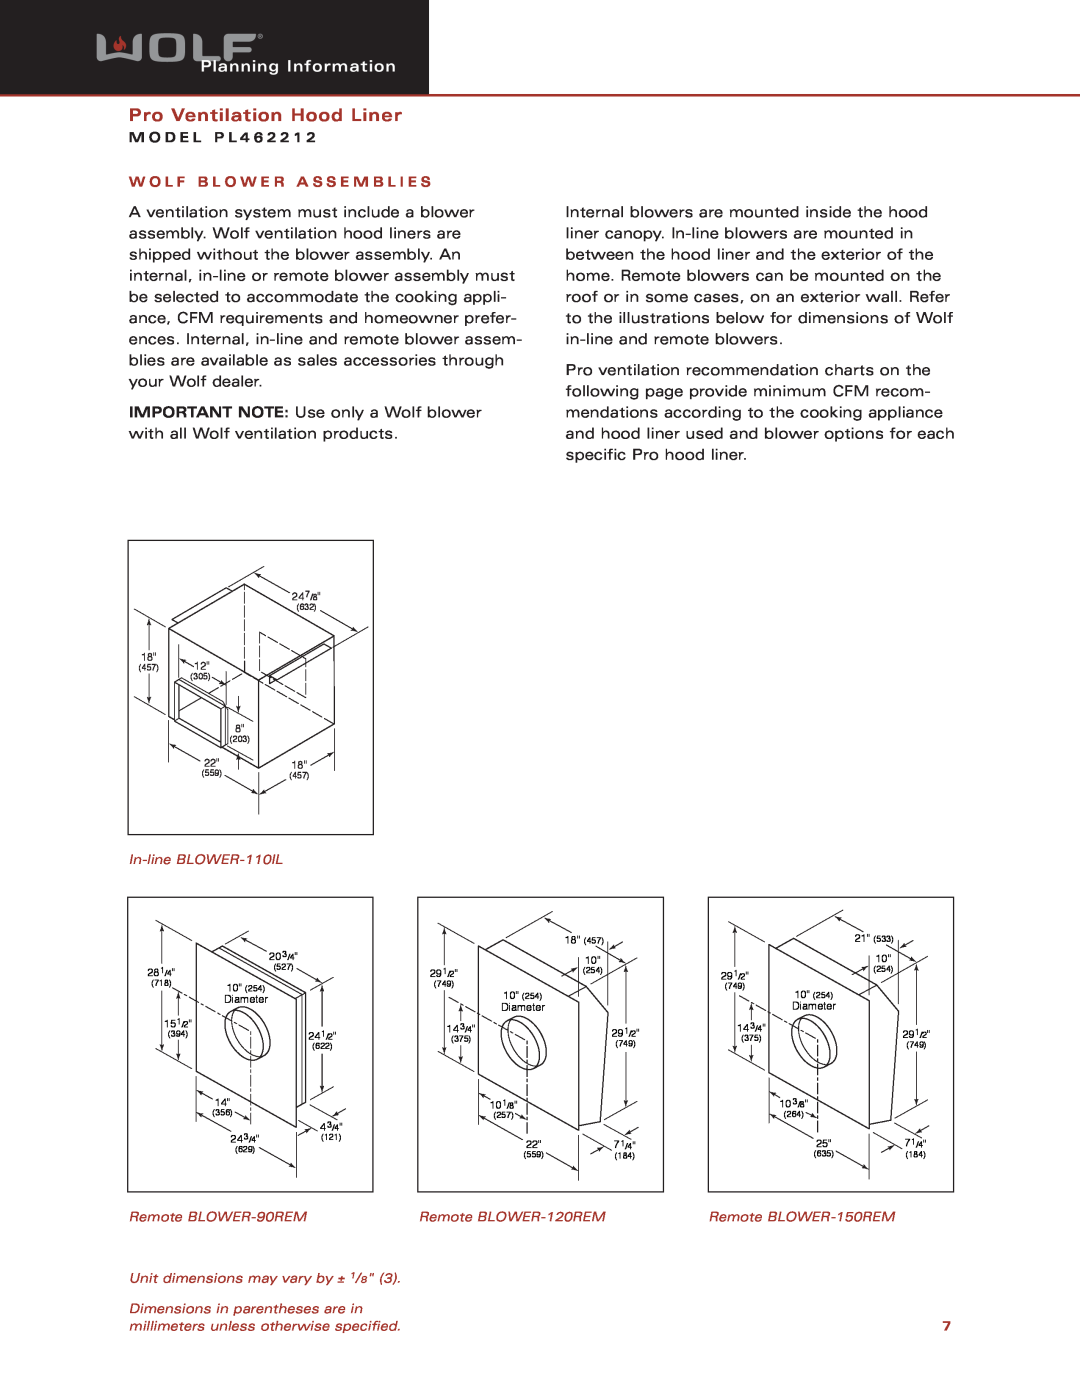 Wolf Appliance Company PL462212 dimensions Pro Ventilation Hood Liner, Planning Information, M O D E L P L 4 6 